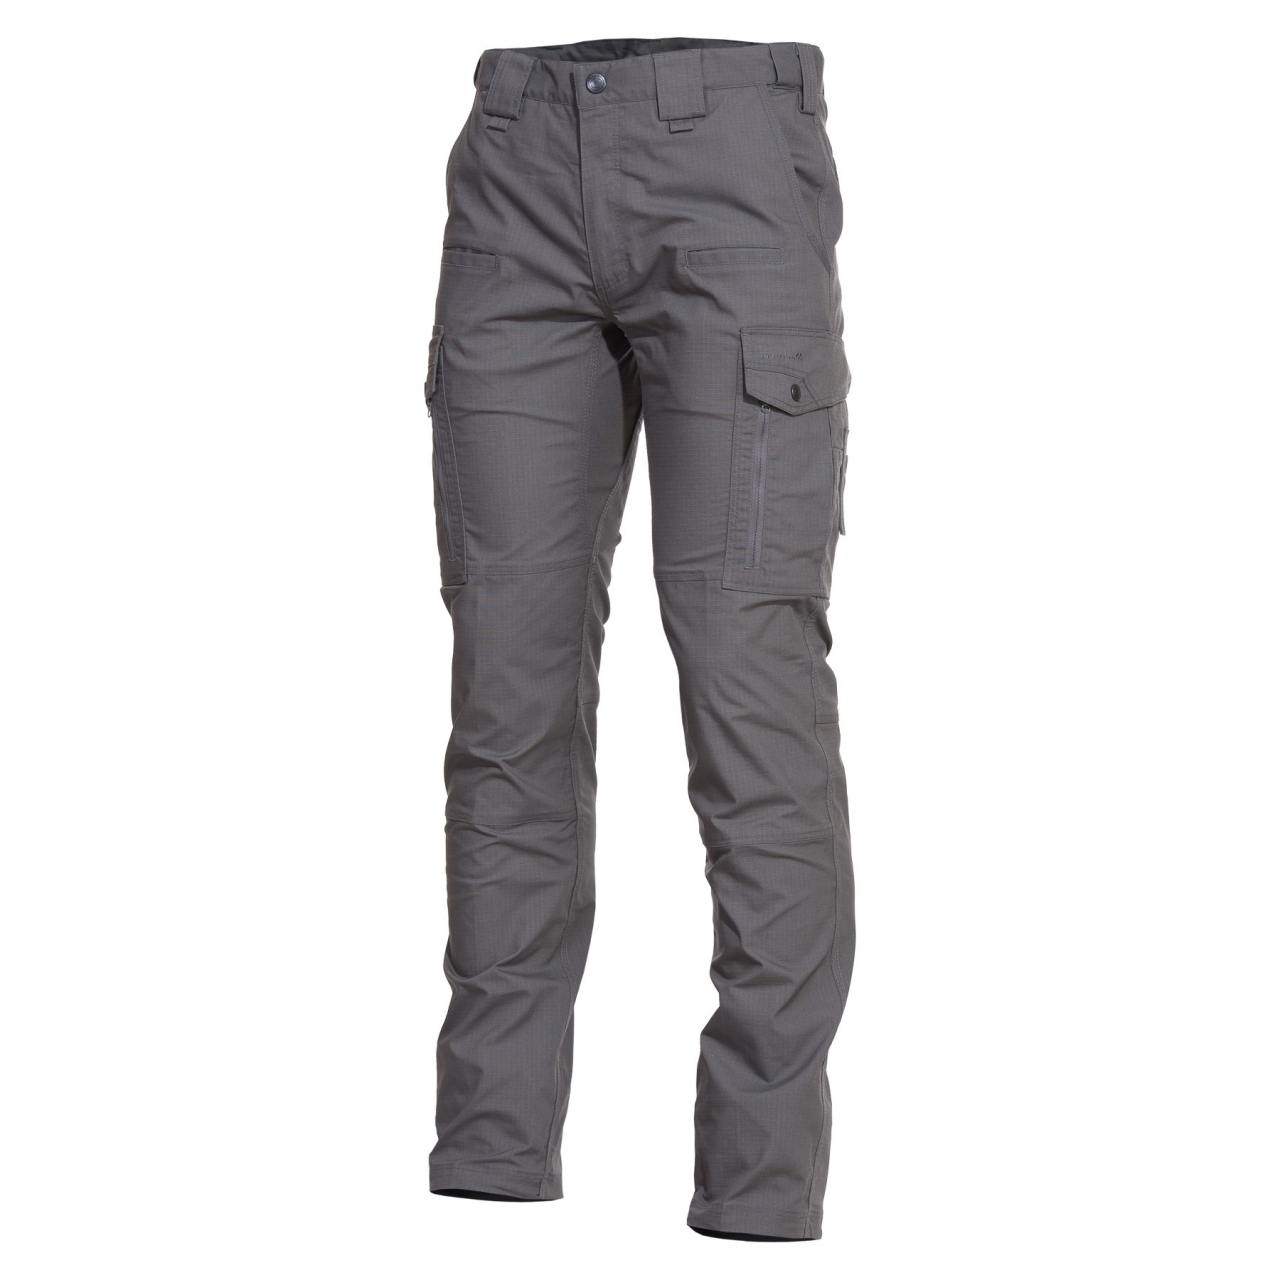 Kalhoty Pentagon Ranger 2.0 - šedé, 48 L